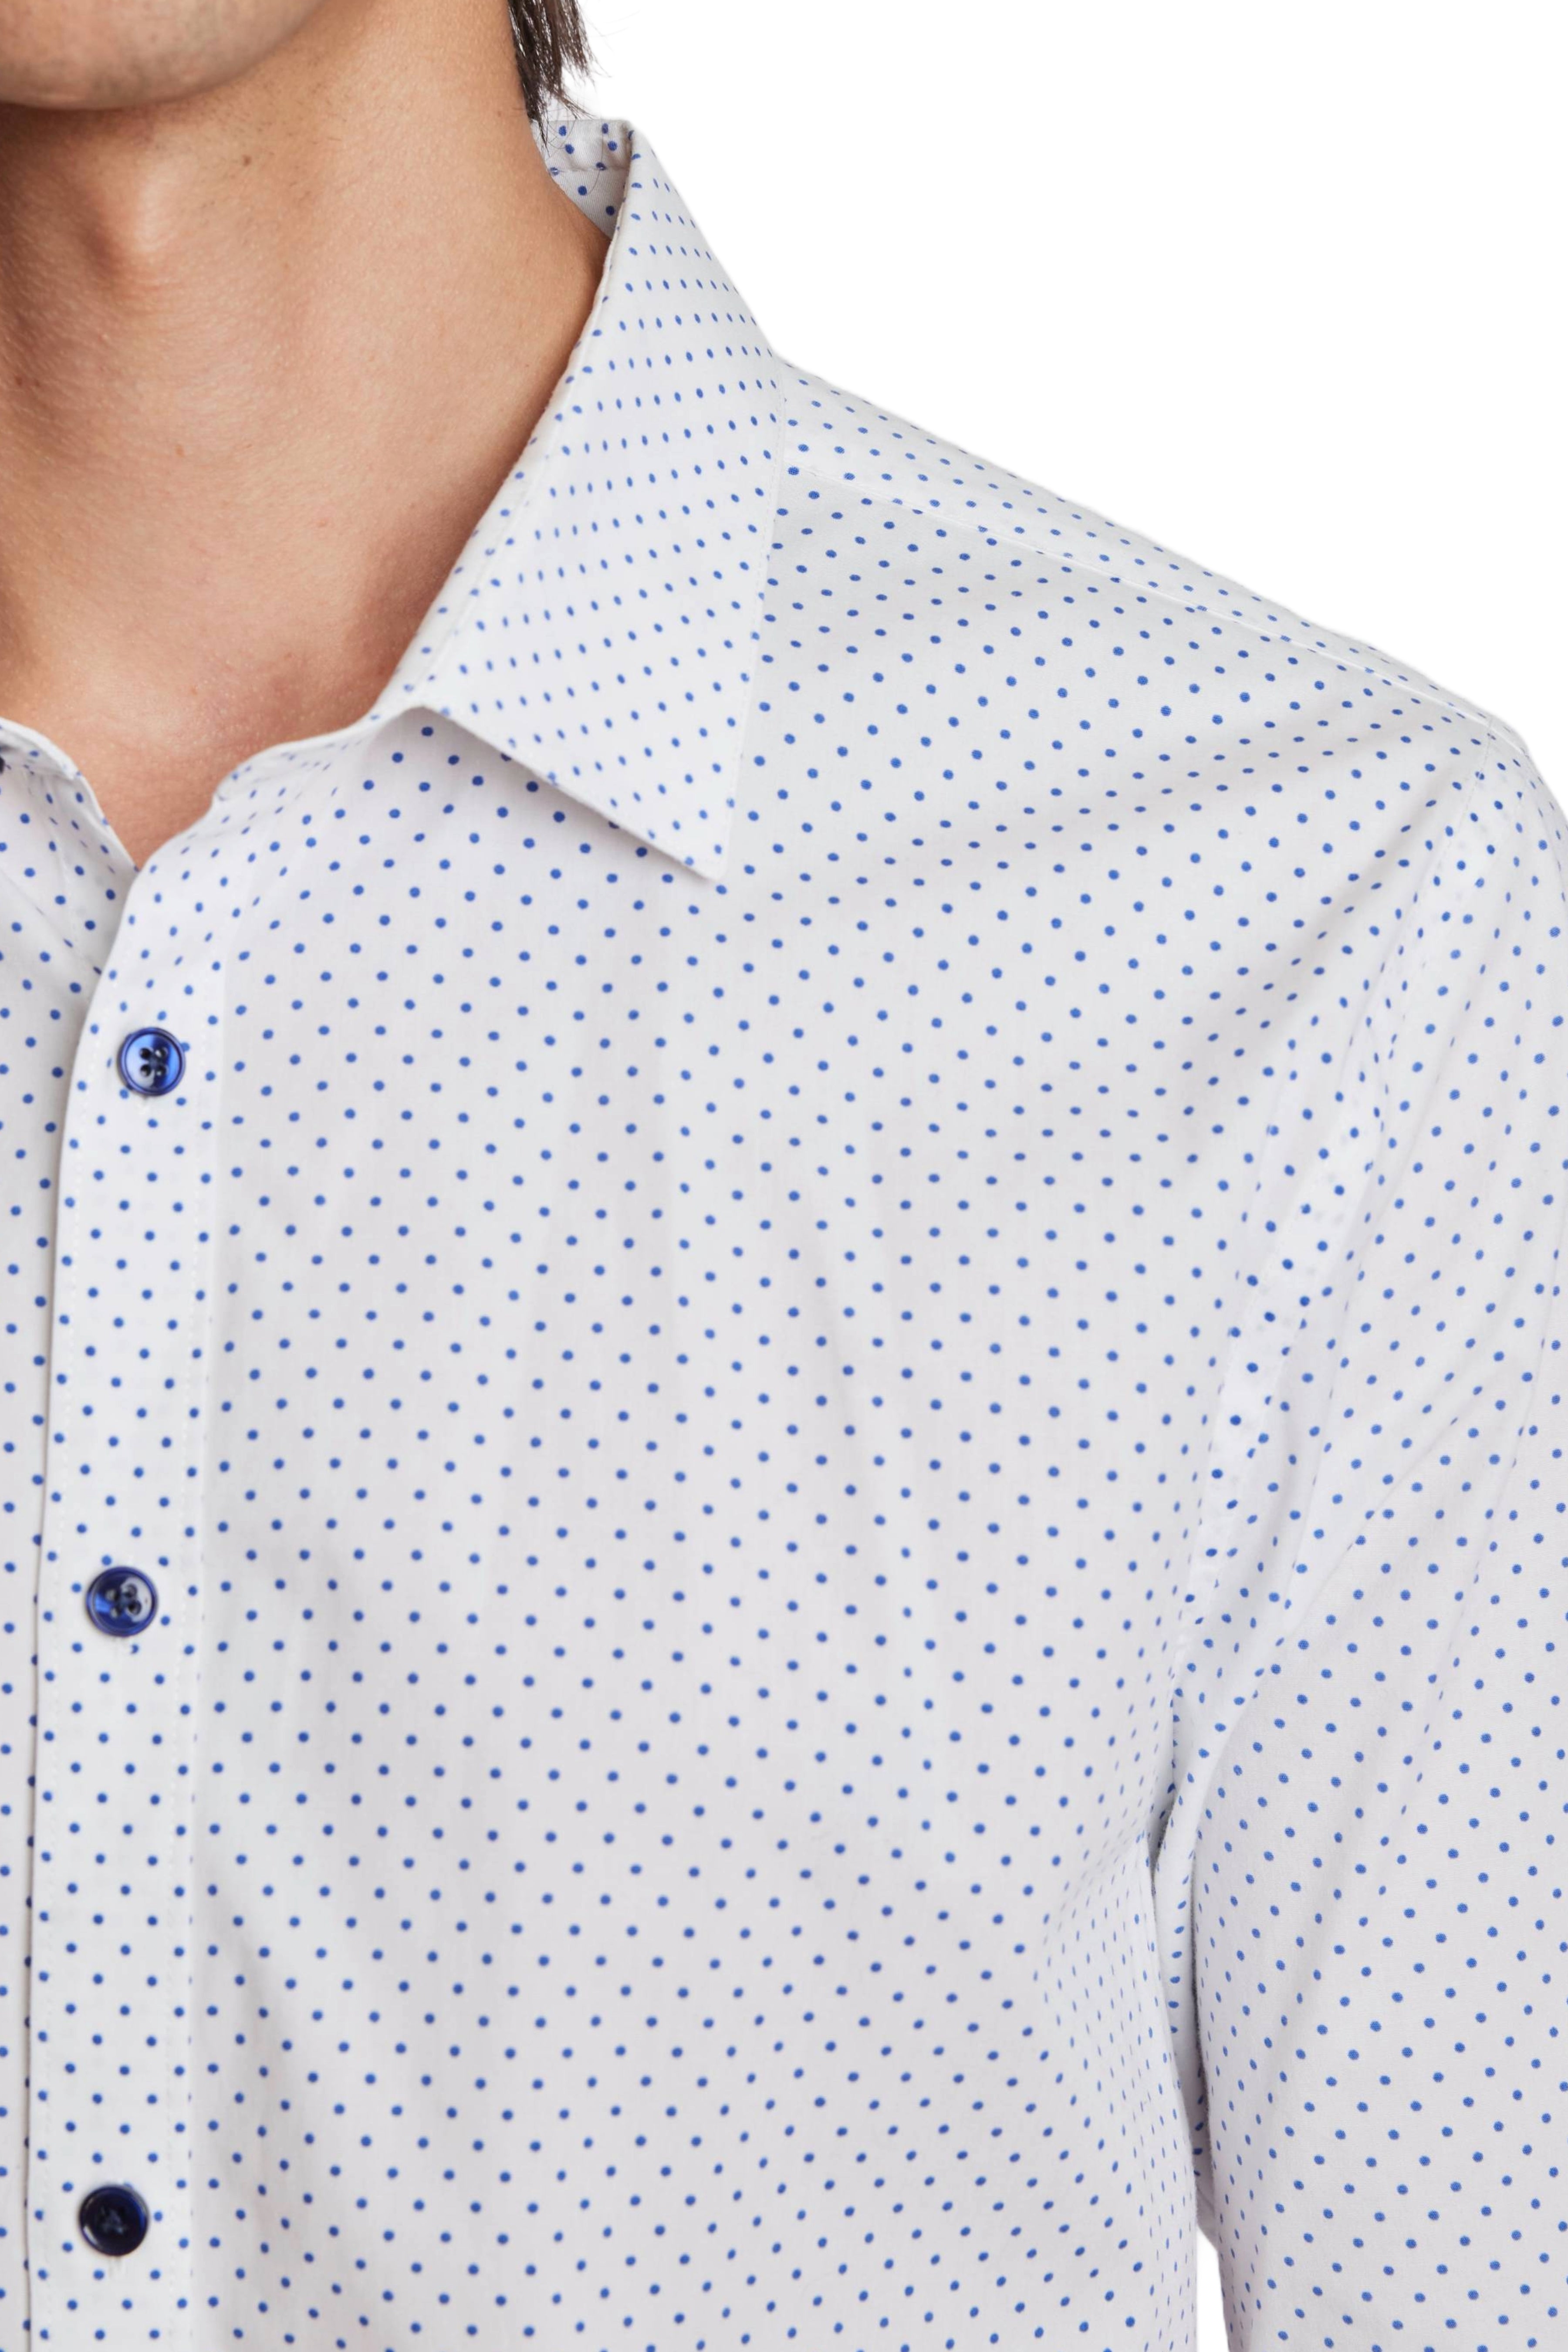 Samuel Spread Collar Shirt - Blue Polka Dots